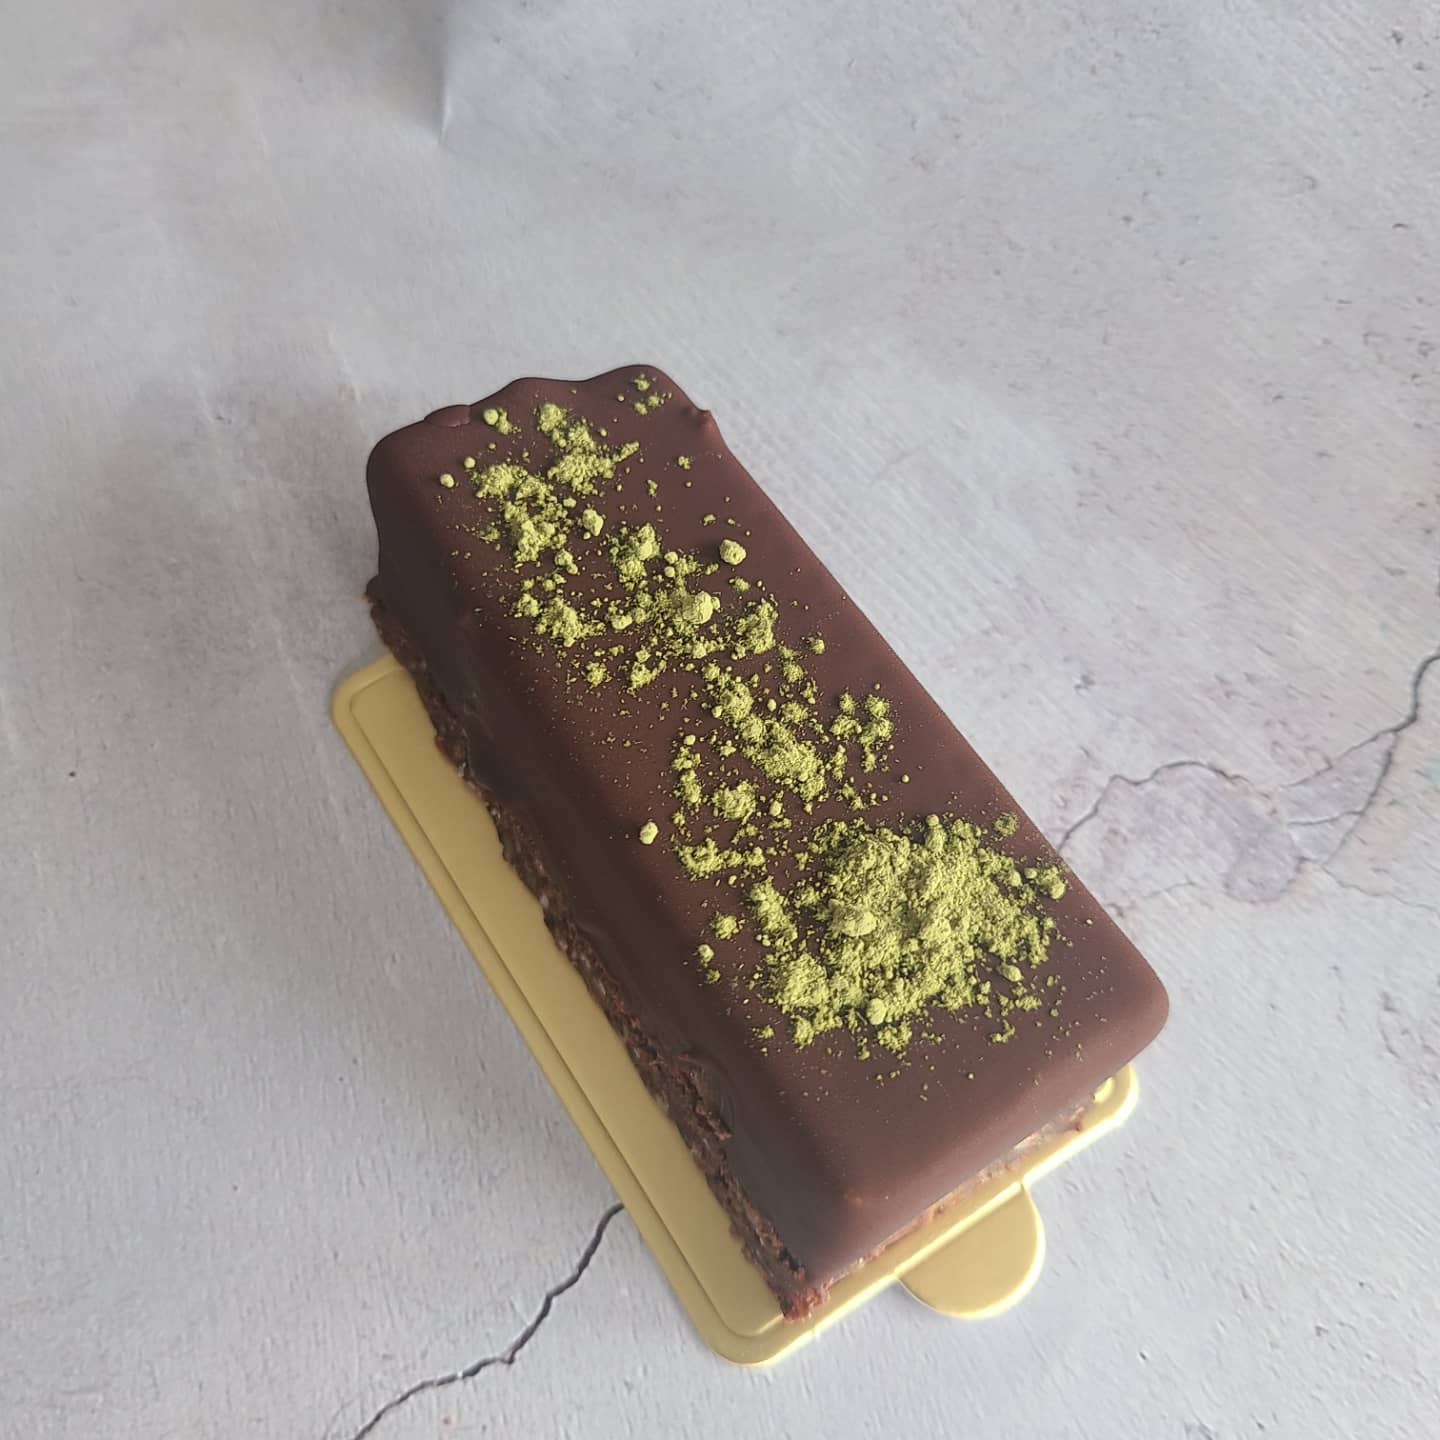 Chocolate-Matcha bars